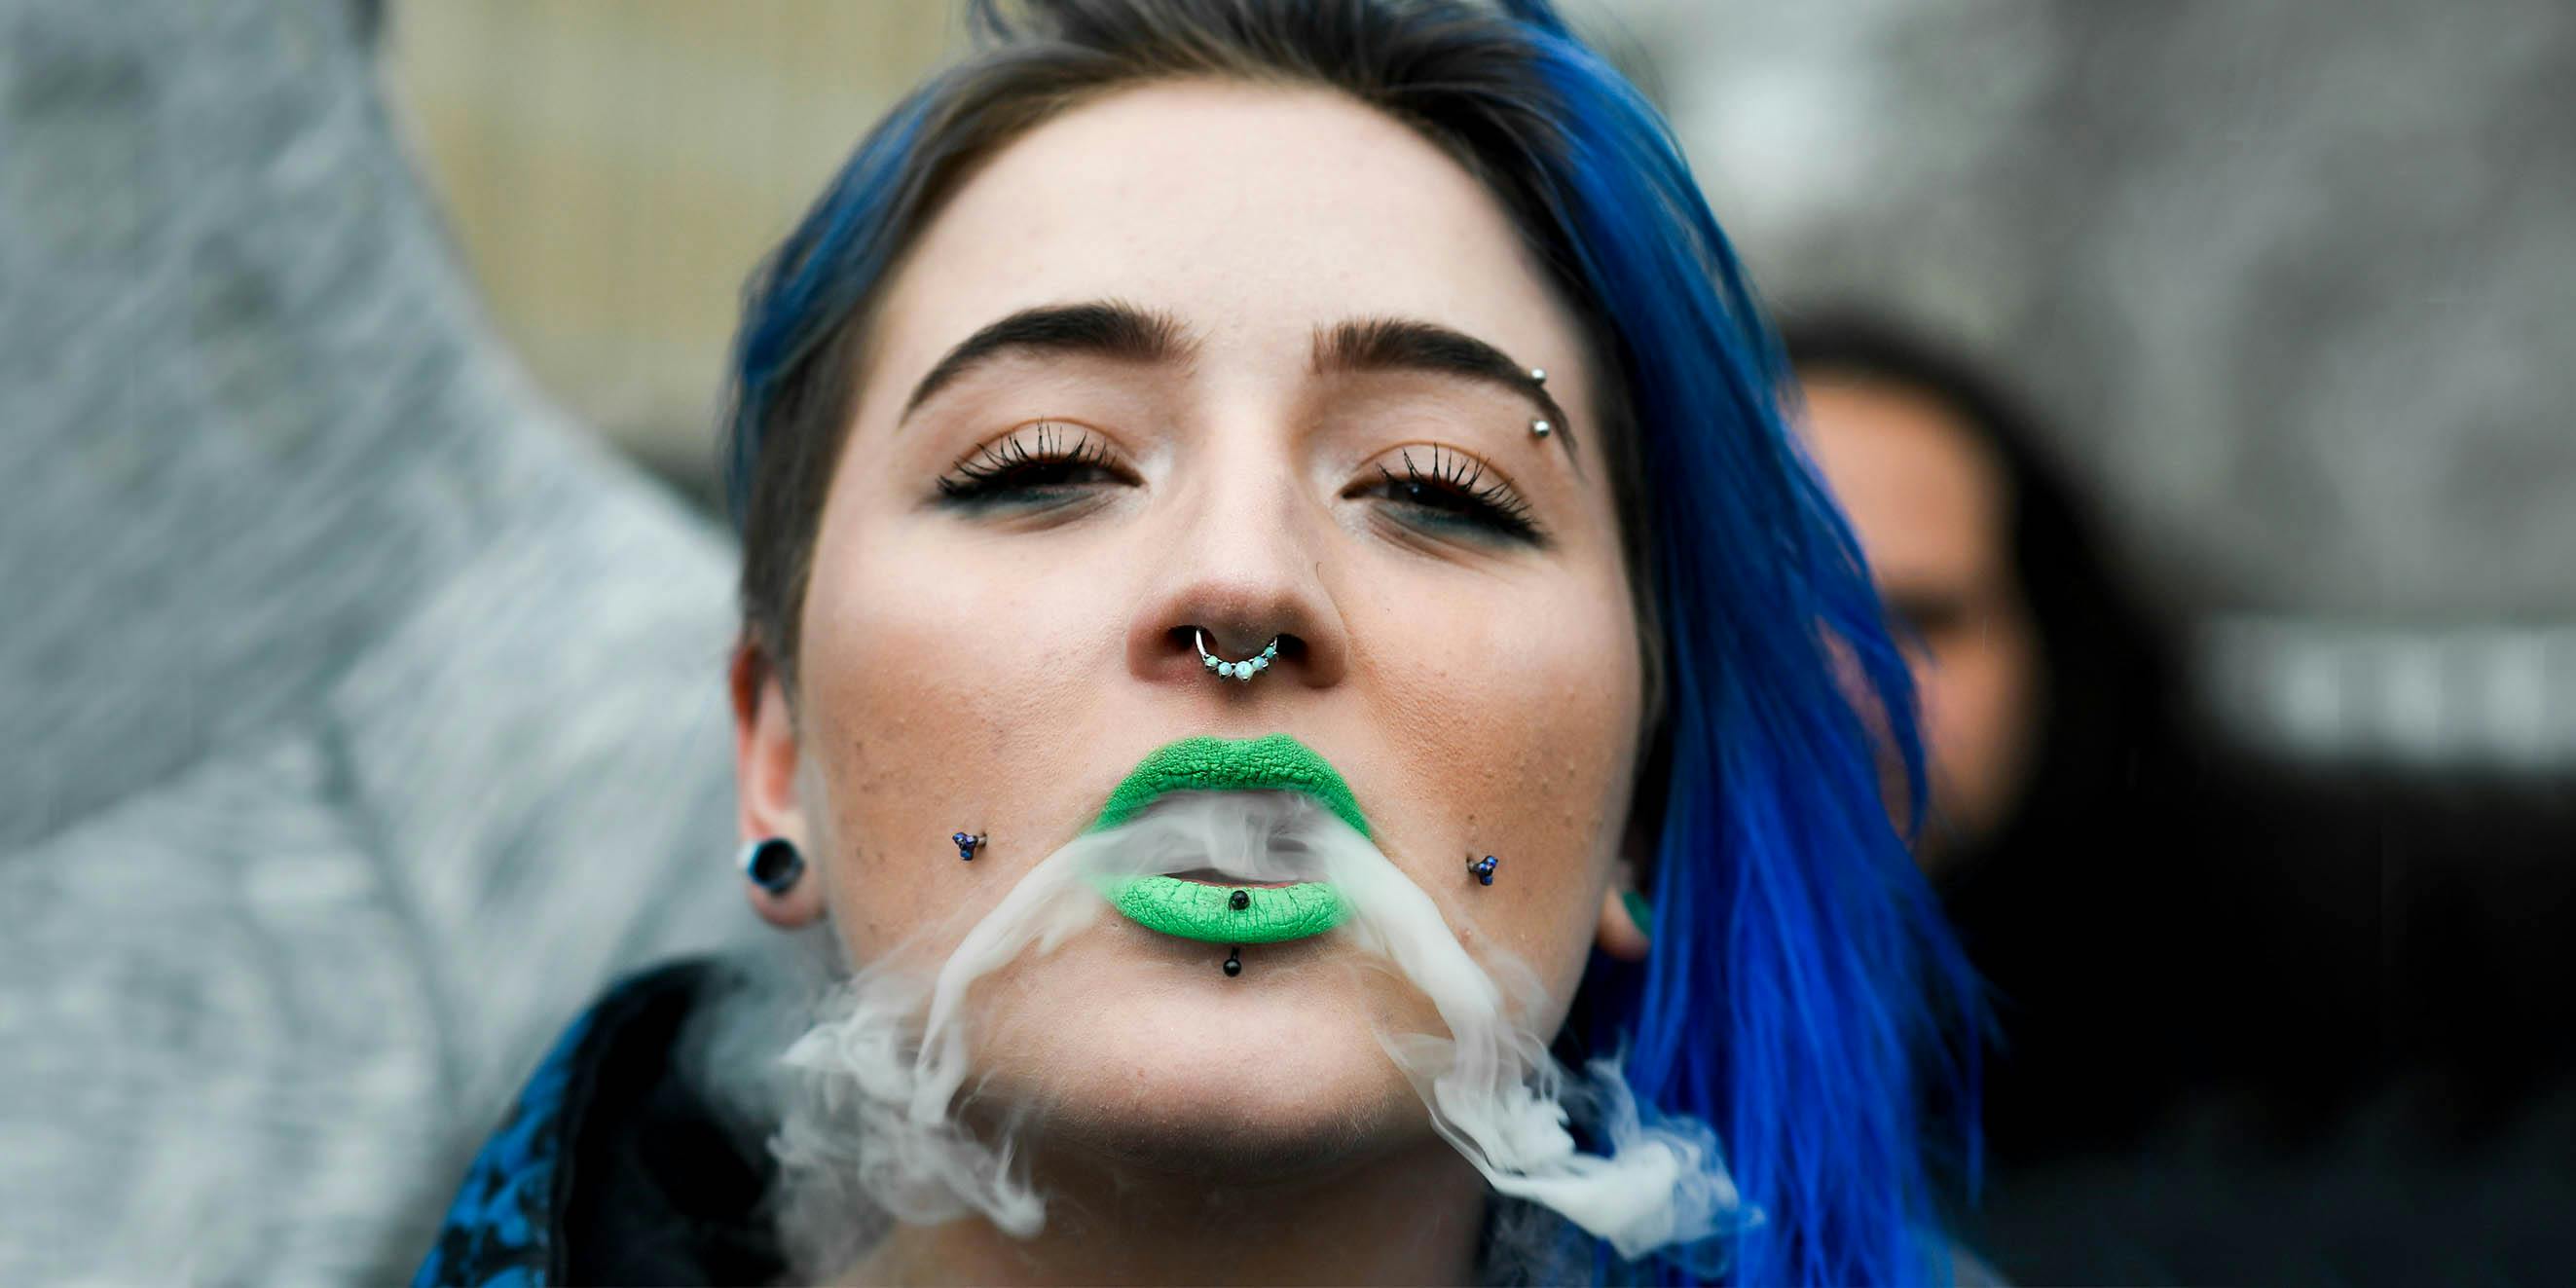 Teen Marijuana Use in Colorado STILL Hasn't Increased Since Legalization: Federal Report